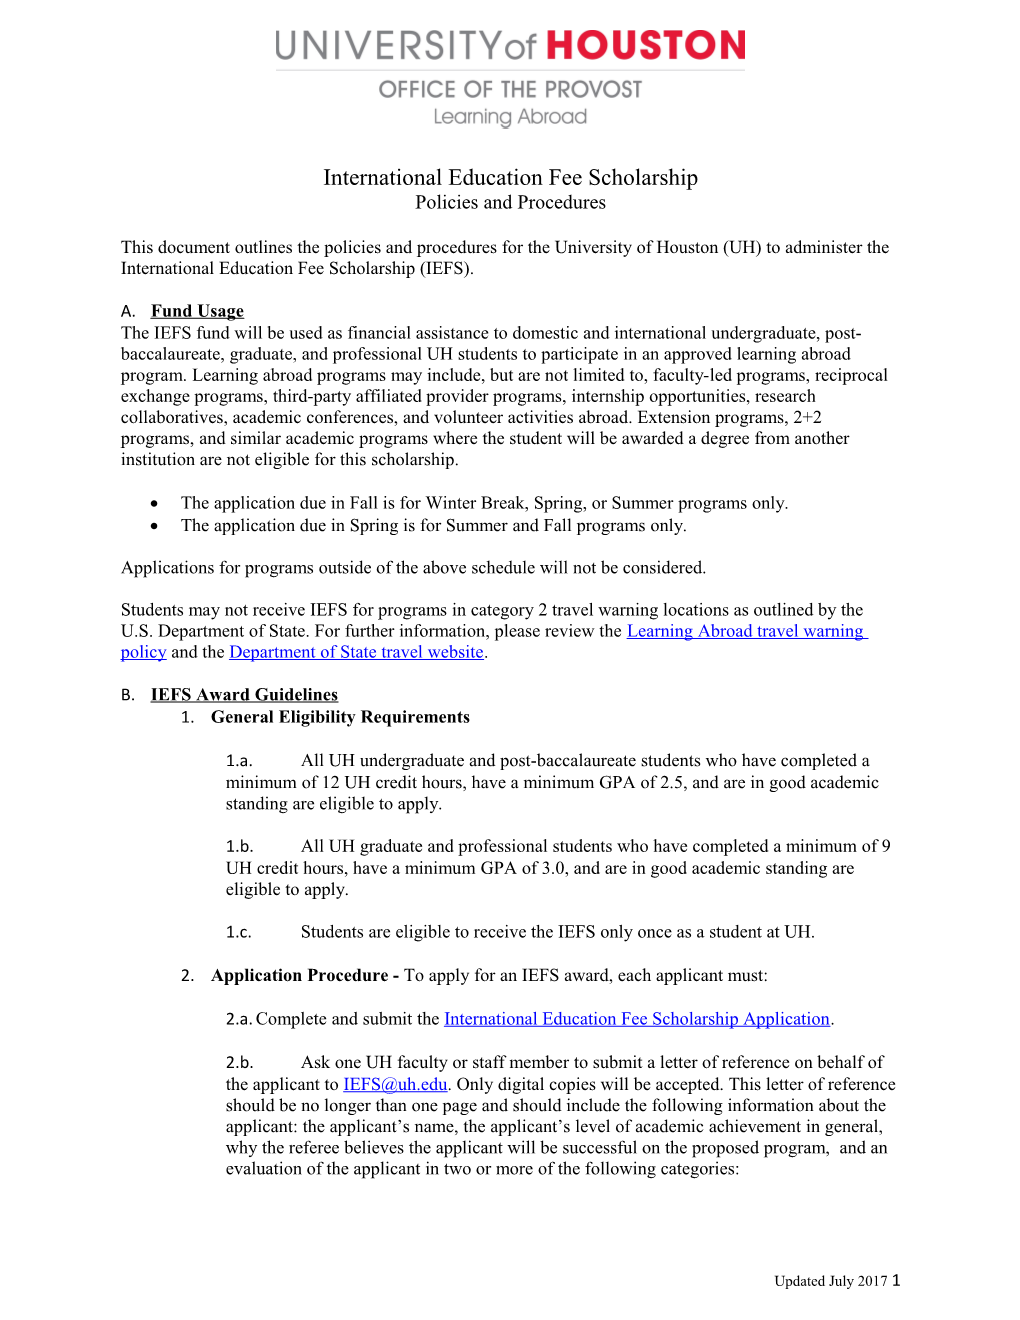 International Education Fee Scholarship